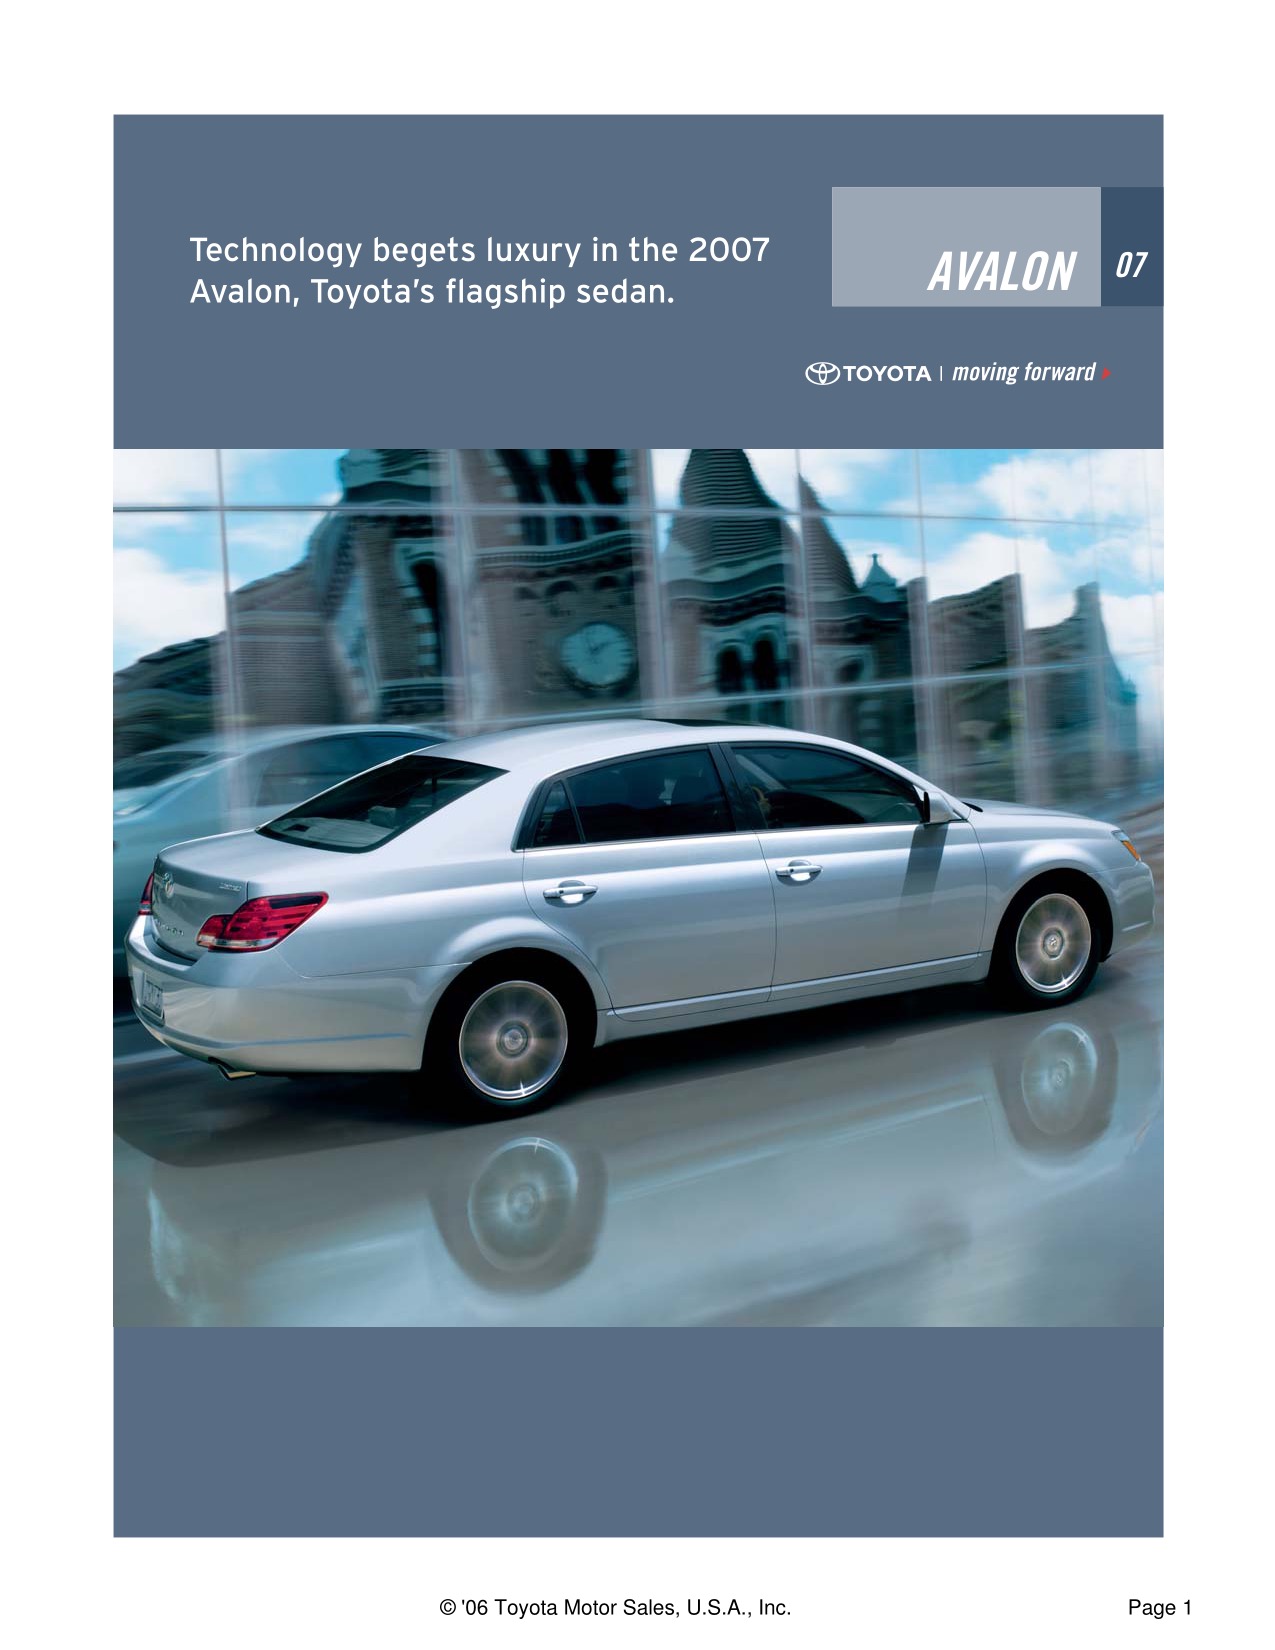 2007 Toyota Avalon Brochure